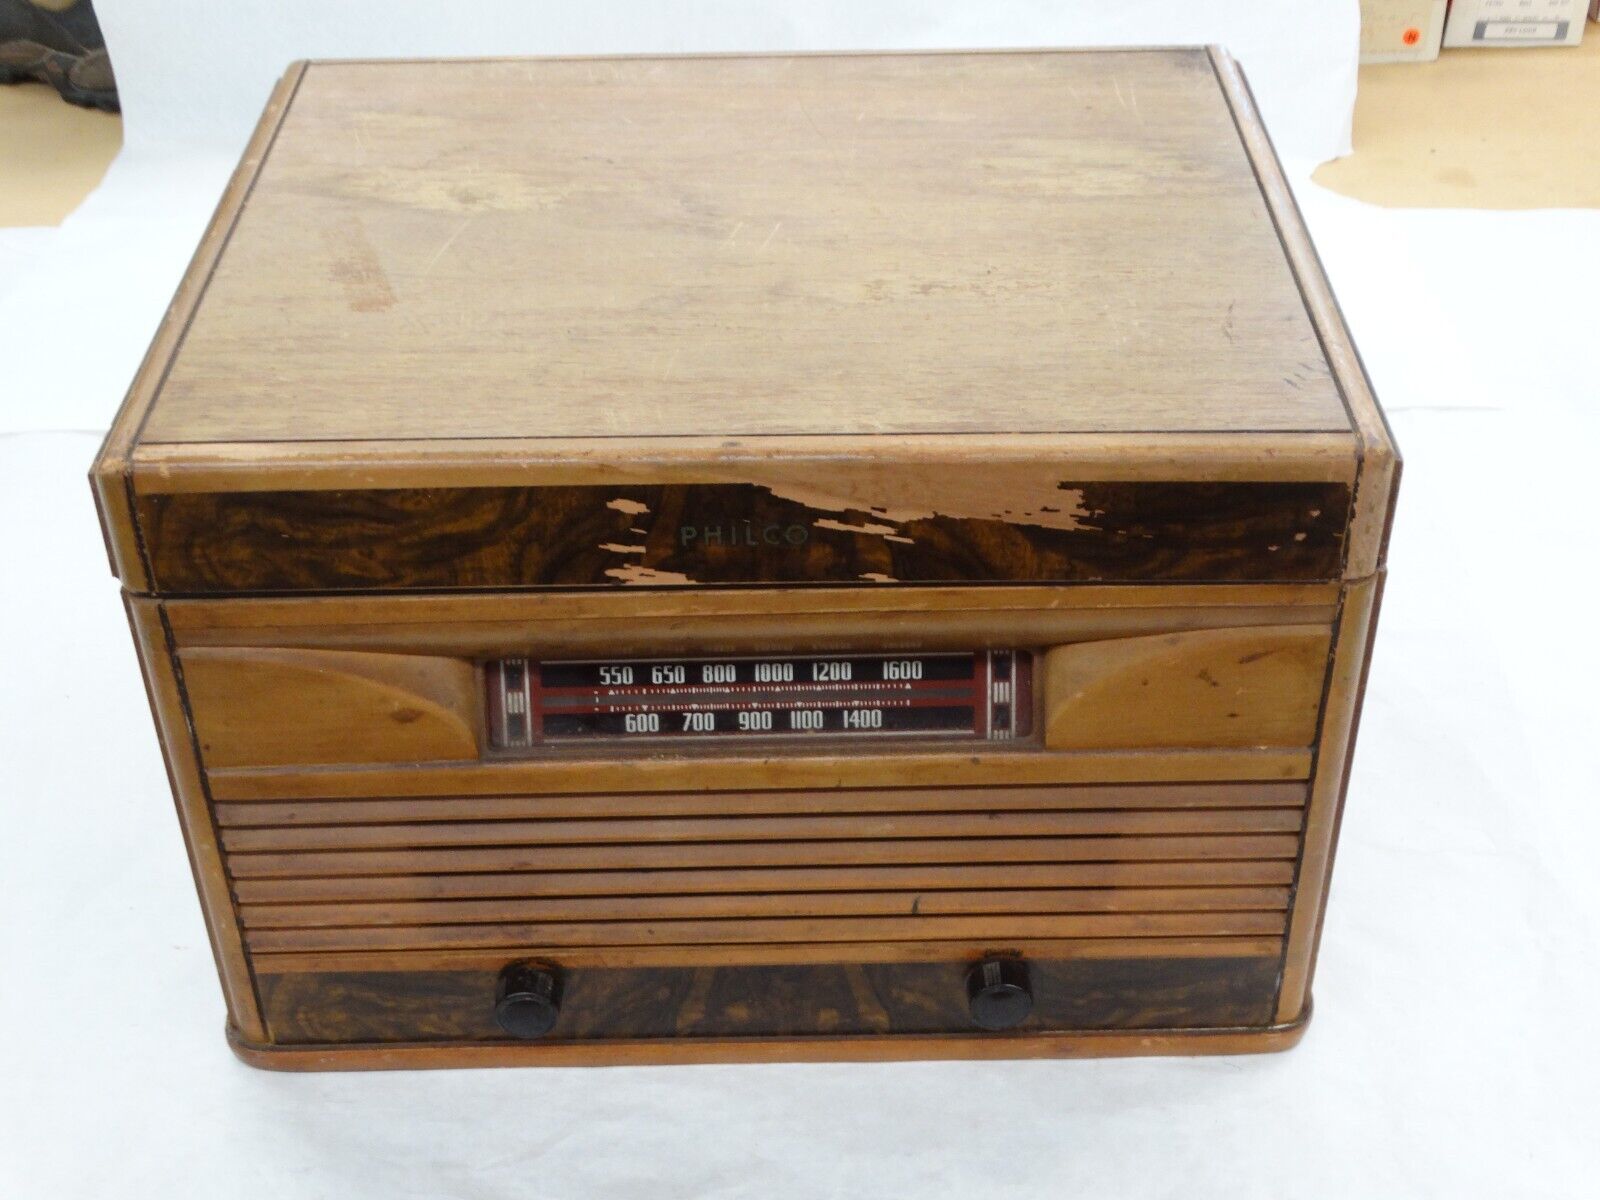 Vintage 1950's Philco Model 42-1001 Tabletop Radio with 78rpm Phonograph